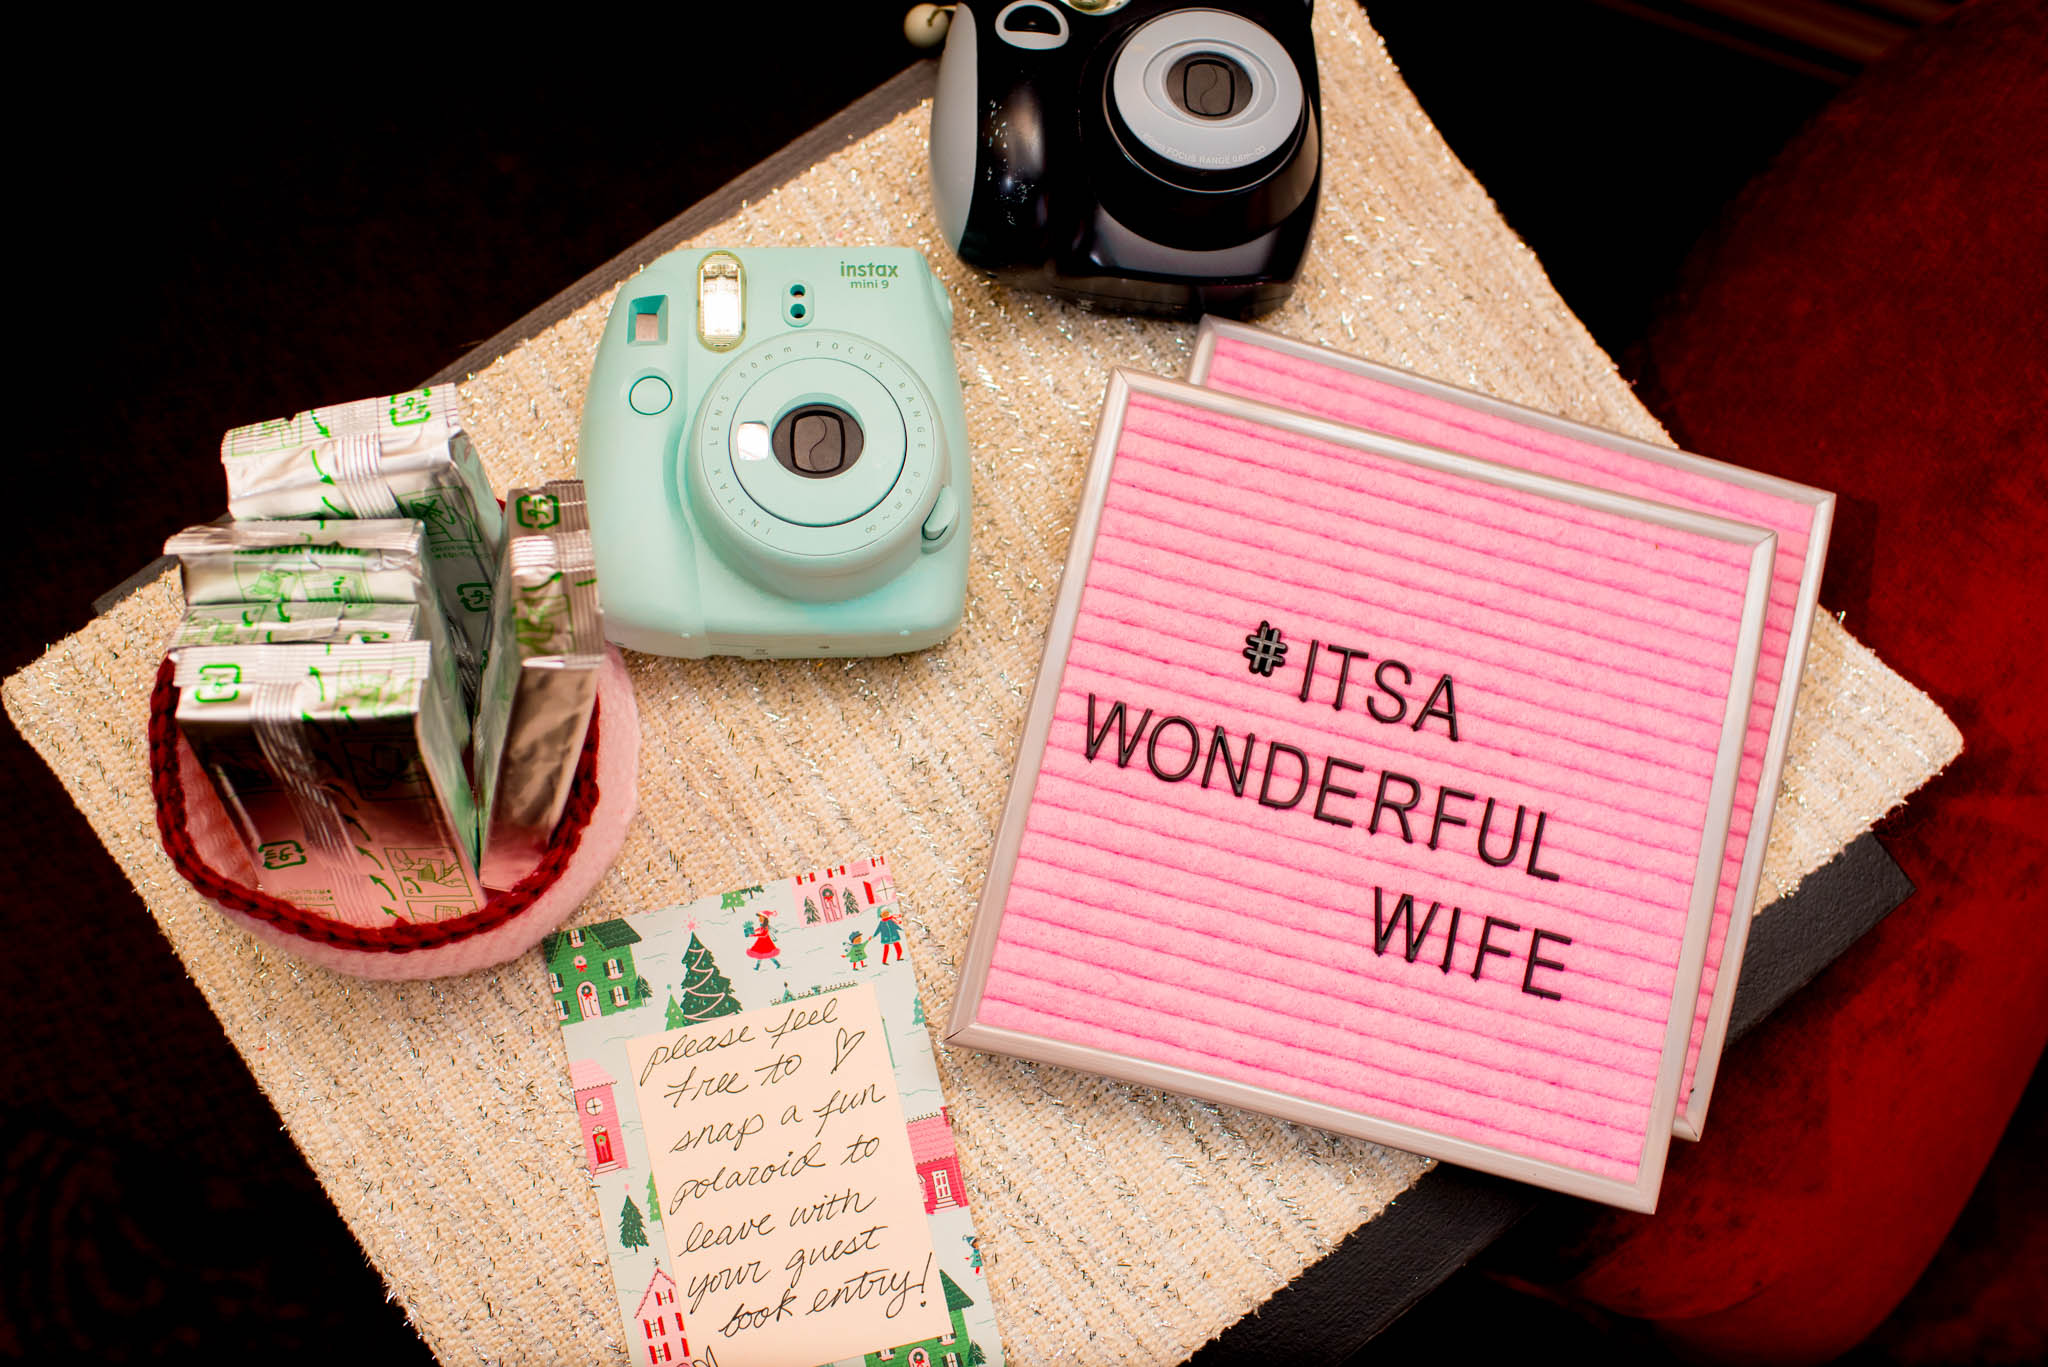 Polaroid camera and wedding decorations